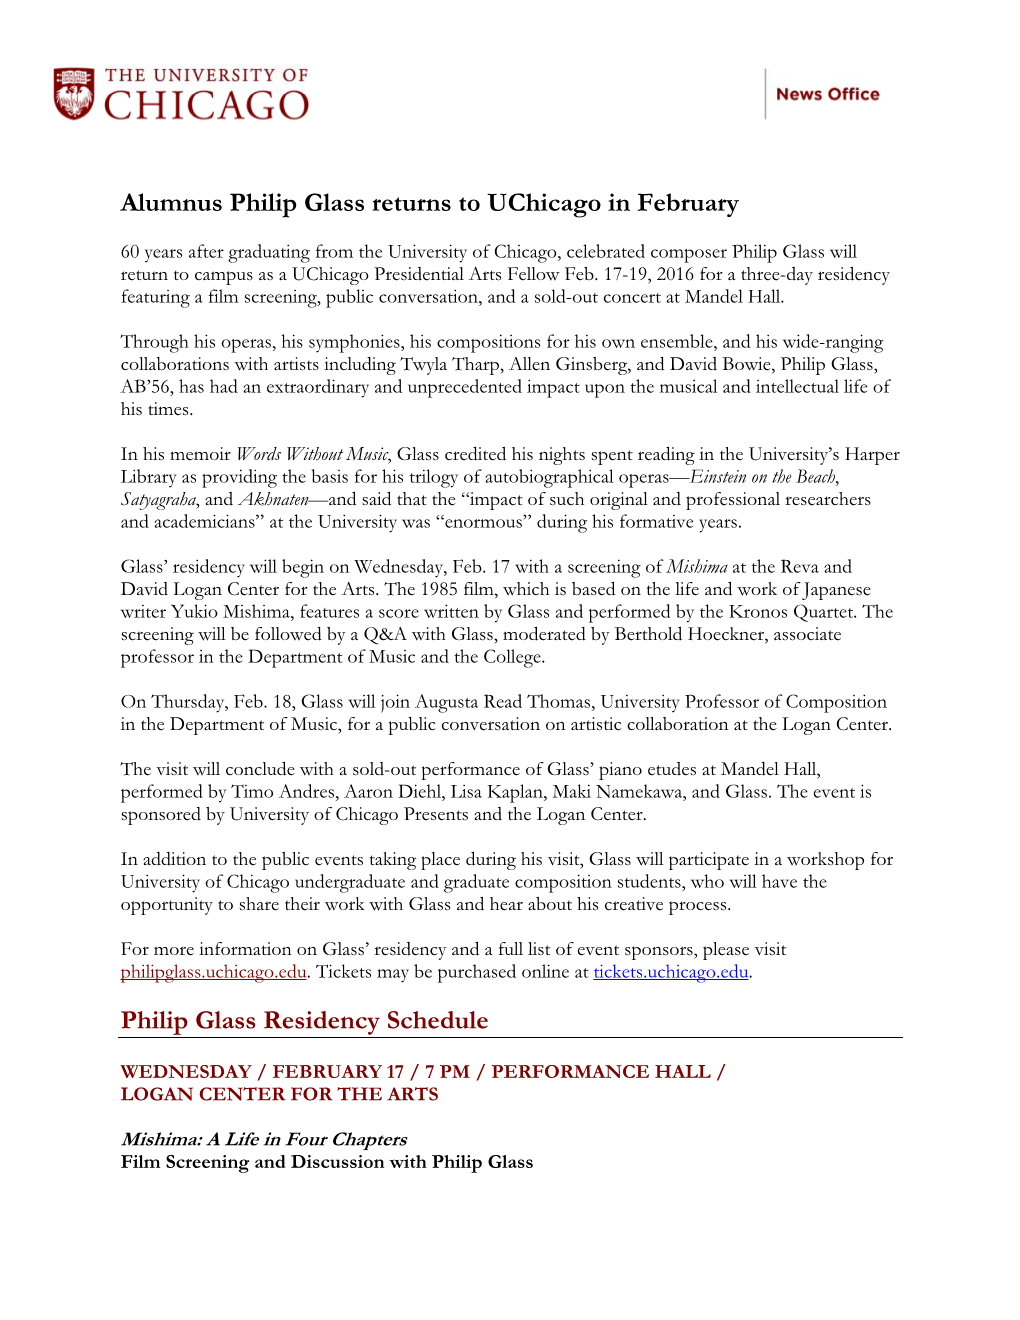 Alumnus Philip Glass Returns to Uchicago in February Philip Glass Residency Schedule